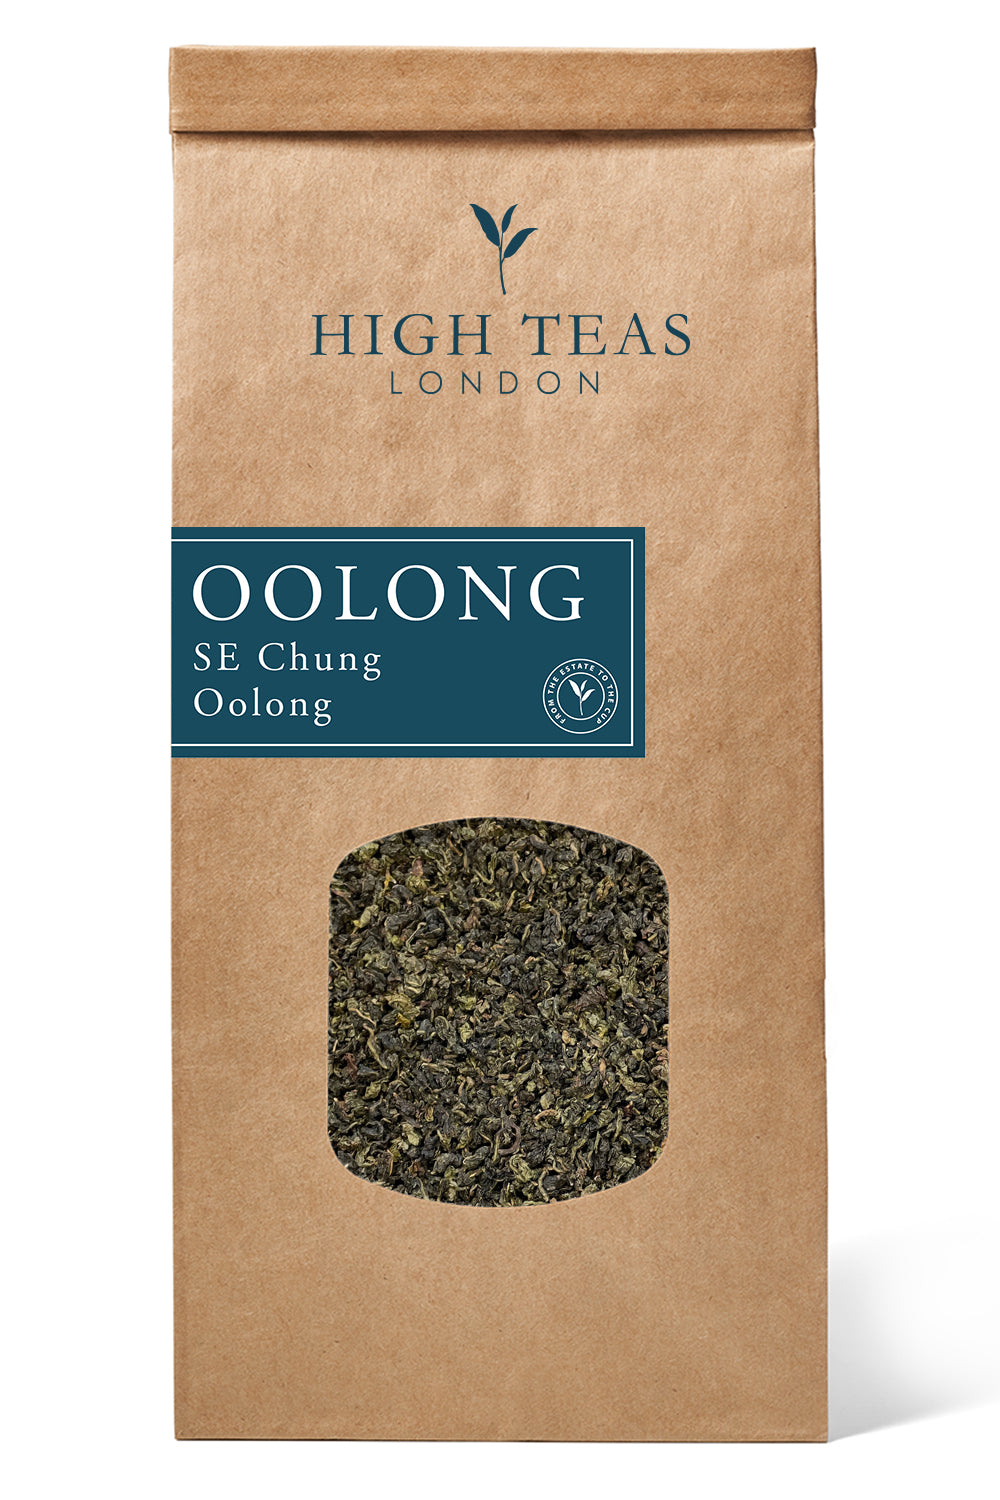 SE Chung Oolong-250g-Loose Leaf Tea-High Teas